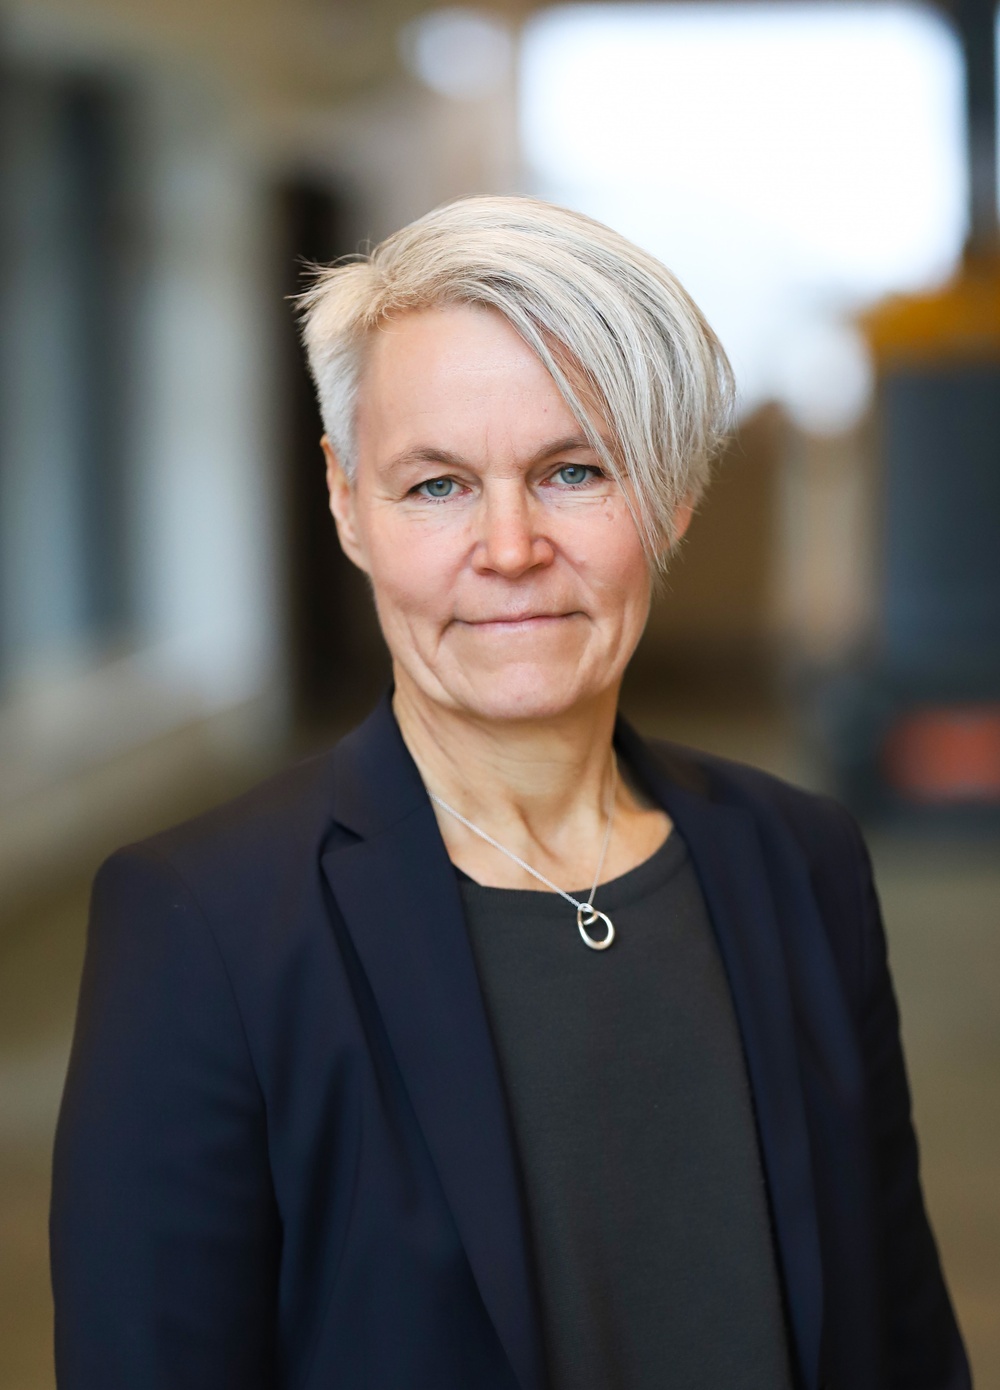 Margareta Friman, acting vice-chancellor Karlstad university